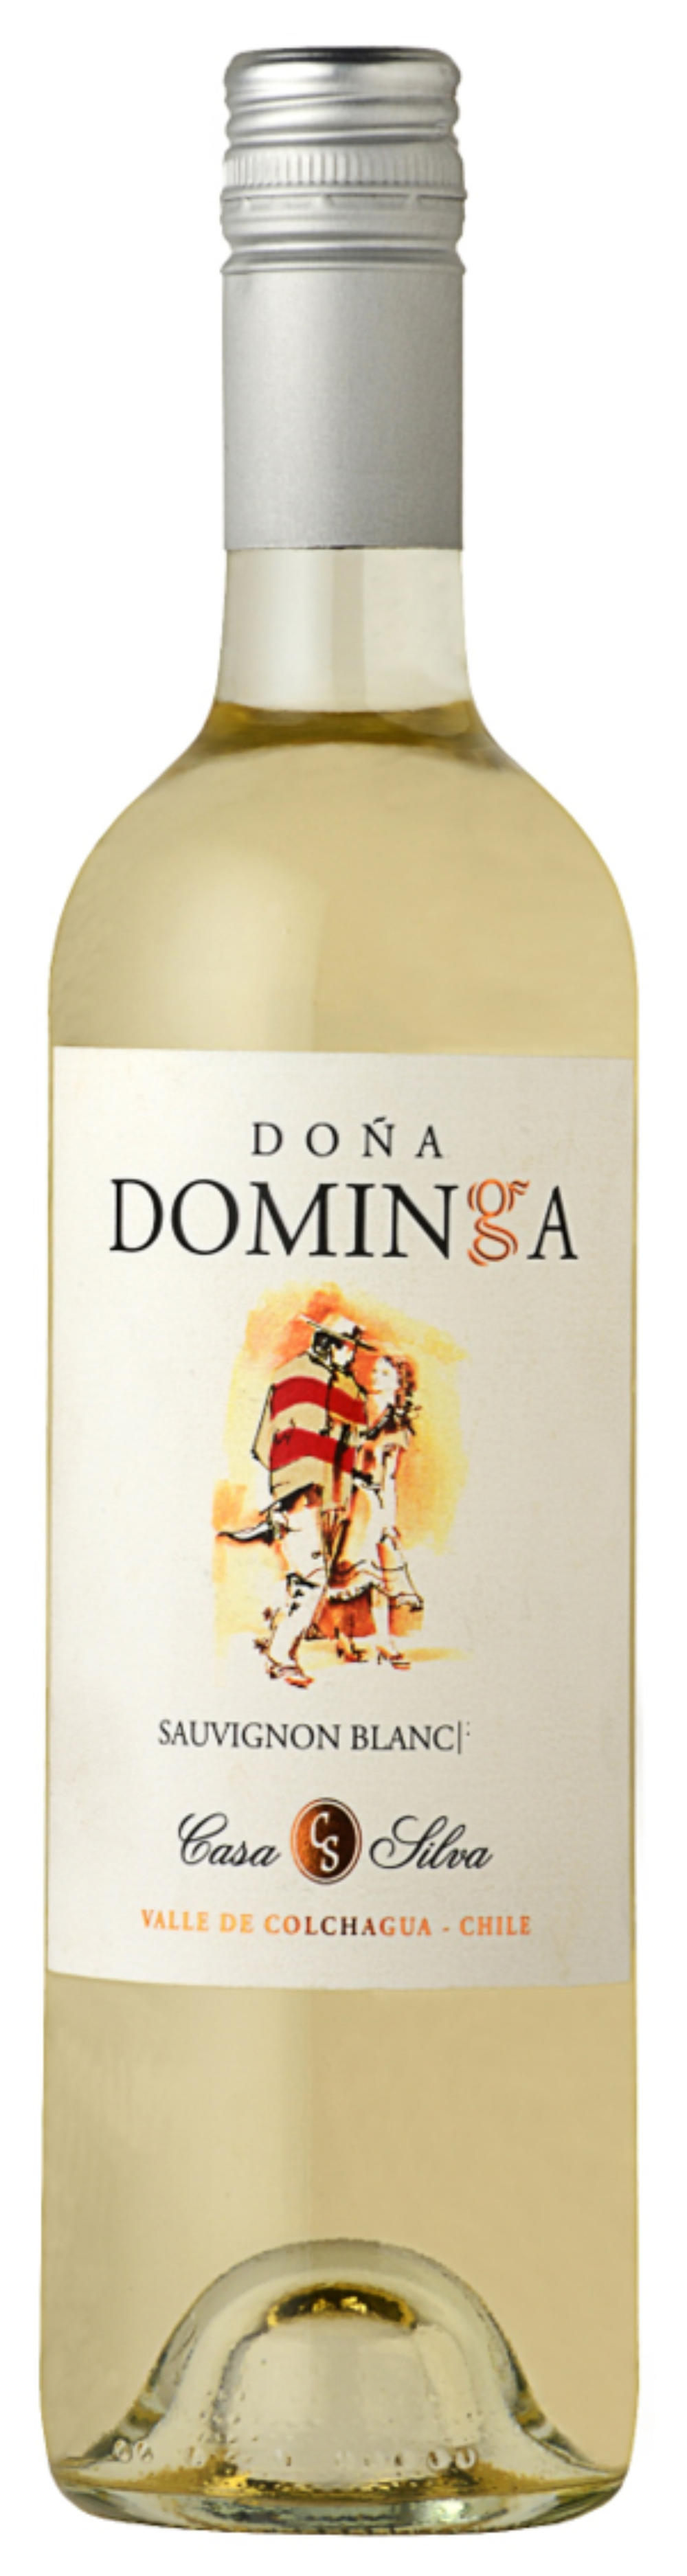 Doña Dominga Sauvignon Blanc 2020